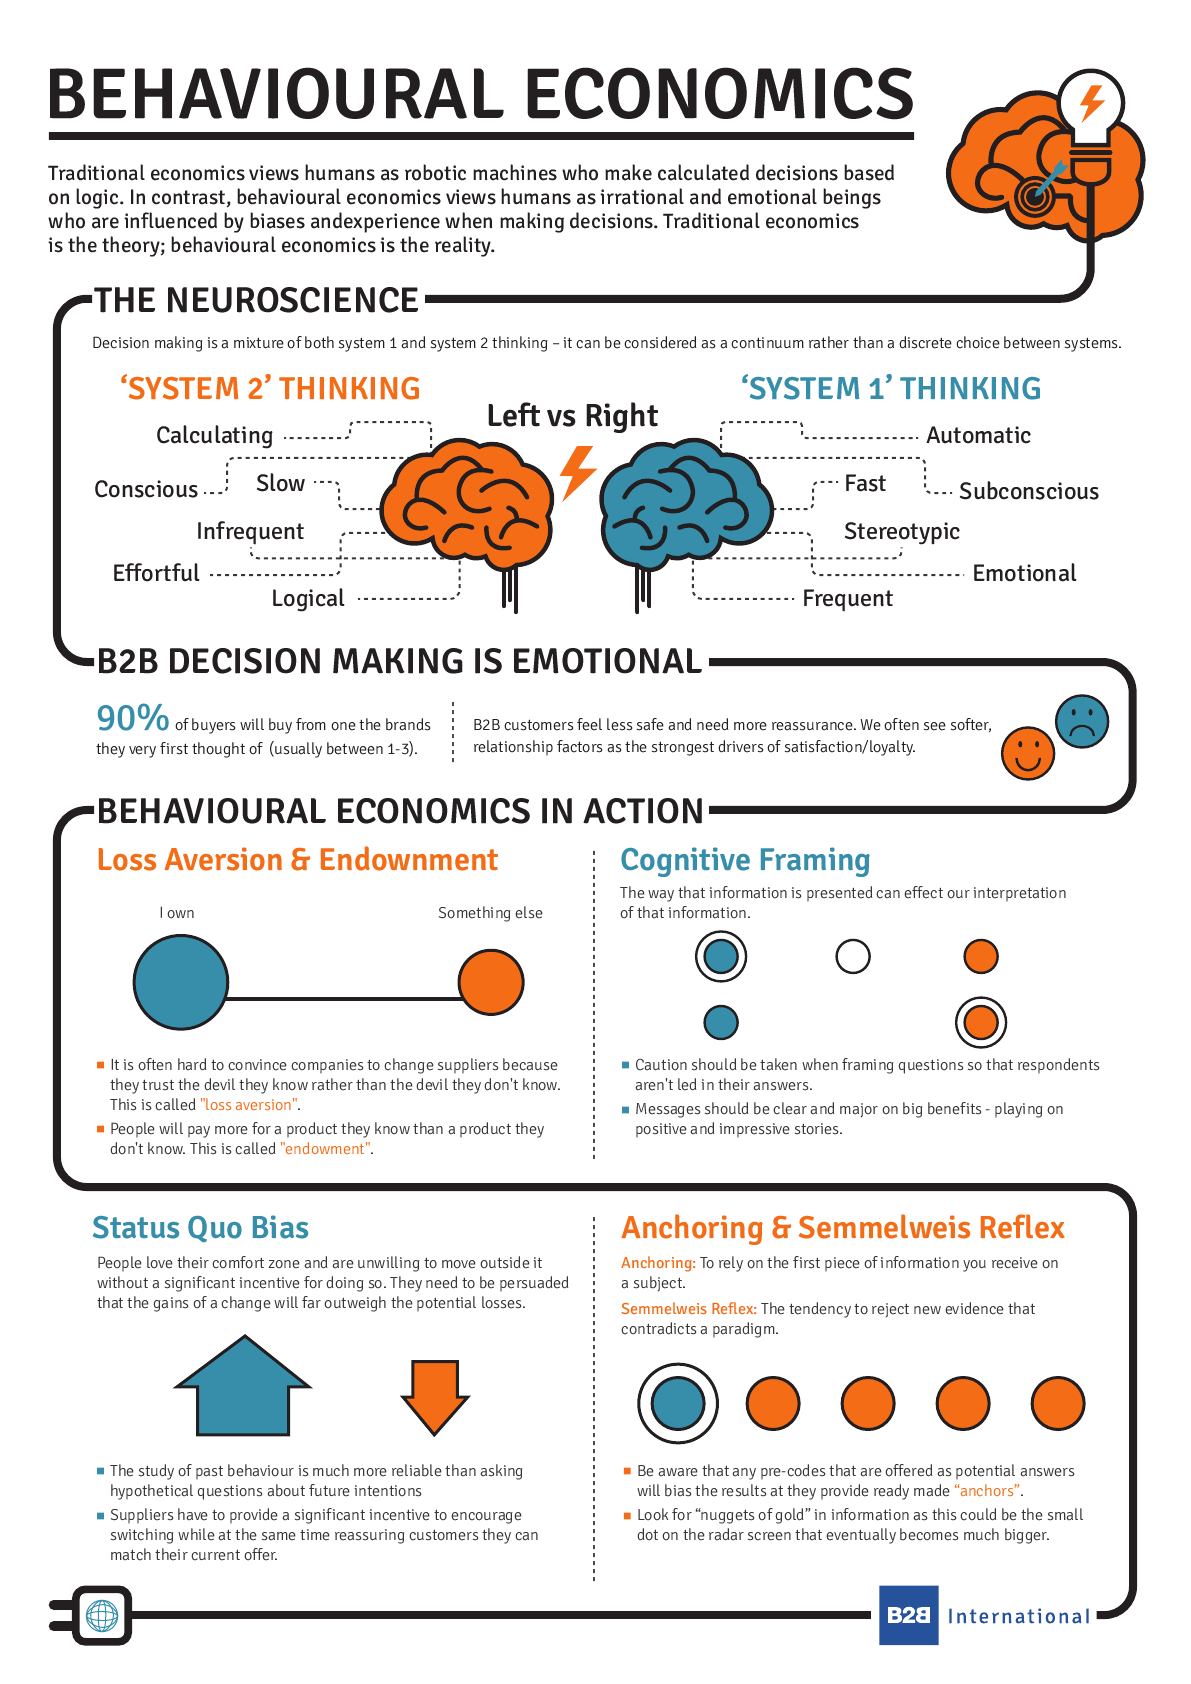 An introduction to behavioural economics in B2B | design | Pinterest ...